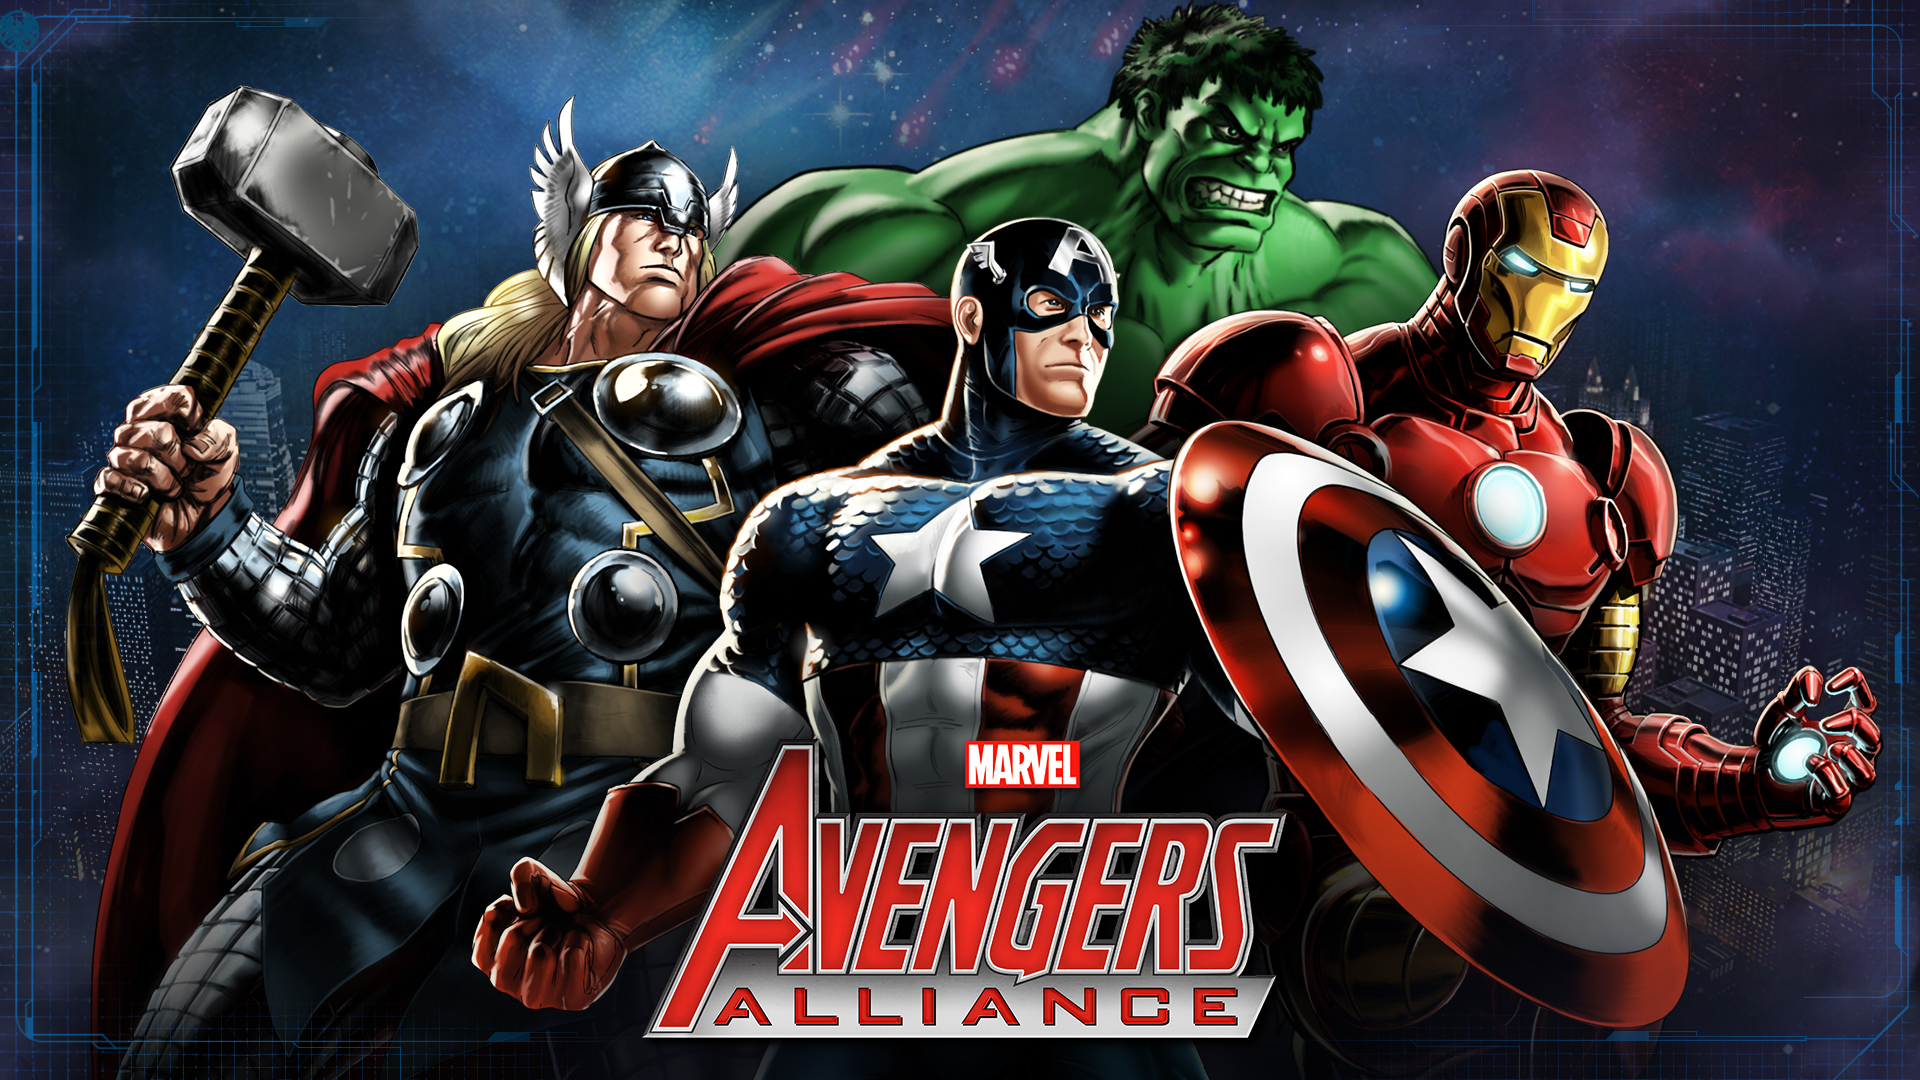 Os Vingadores - The Avengers (The Avengers) By Fantasma